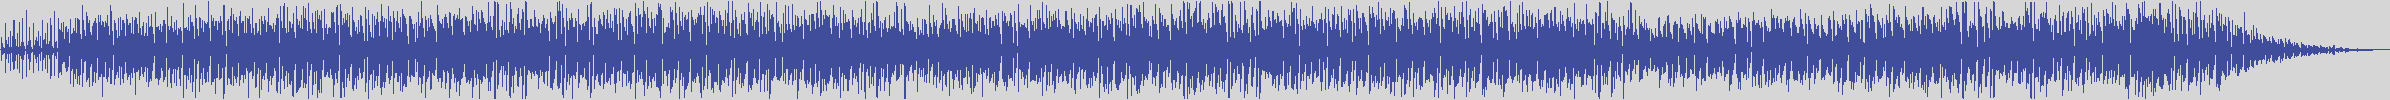 noclouds_chillout [NOC019] Bossarythm - Madre [Original Mix] audio wave form